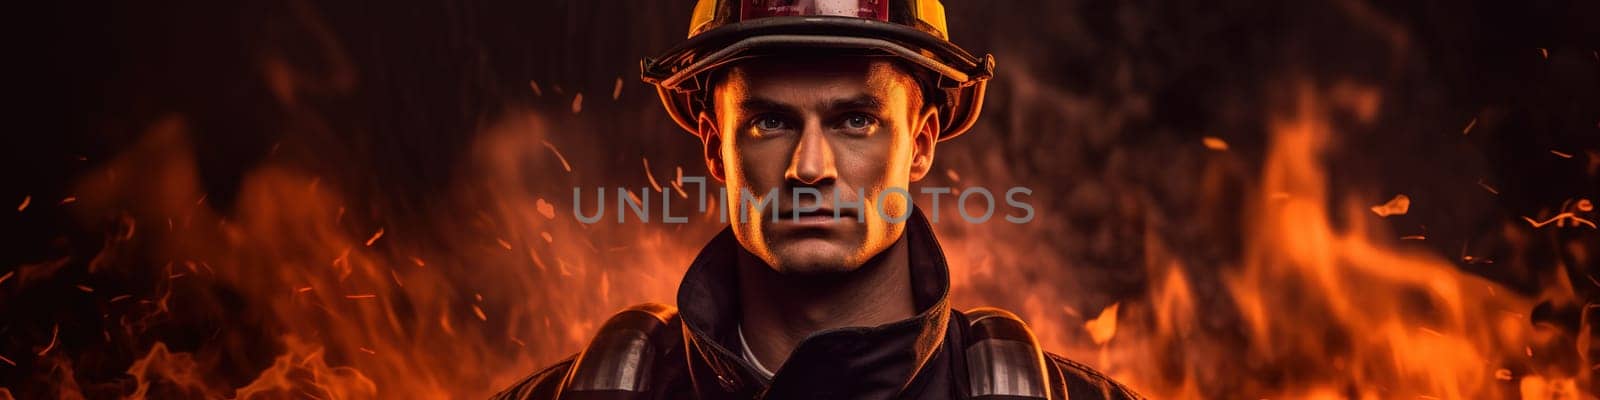 Portrait of firefighter when extinguishing fire, fireman